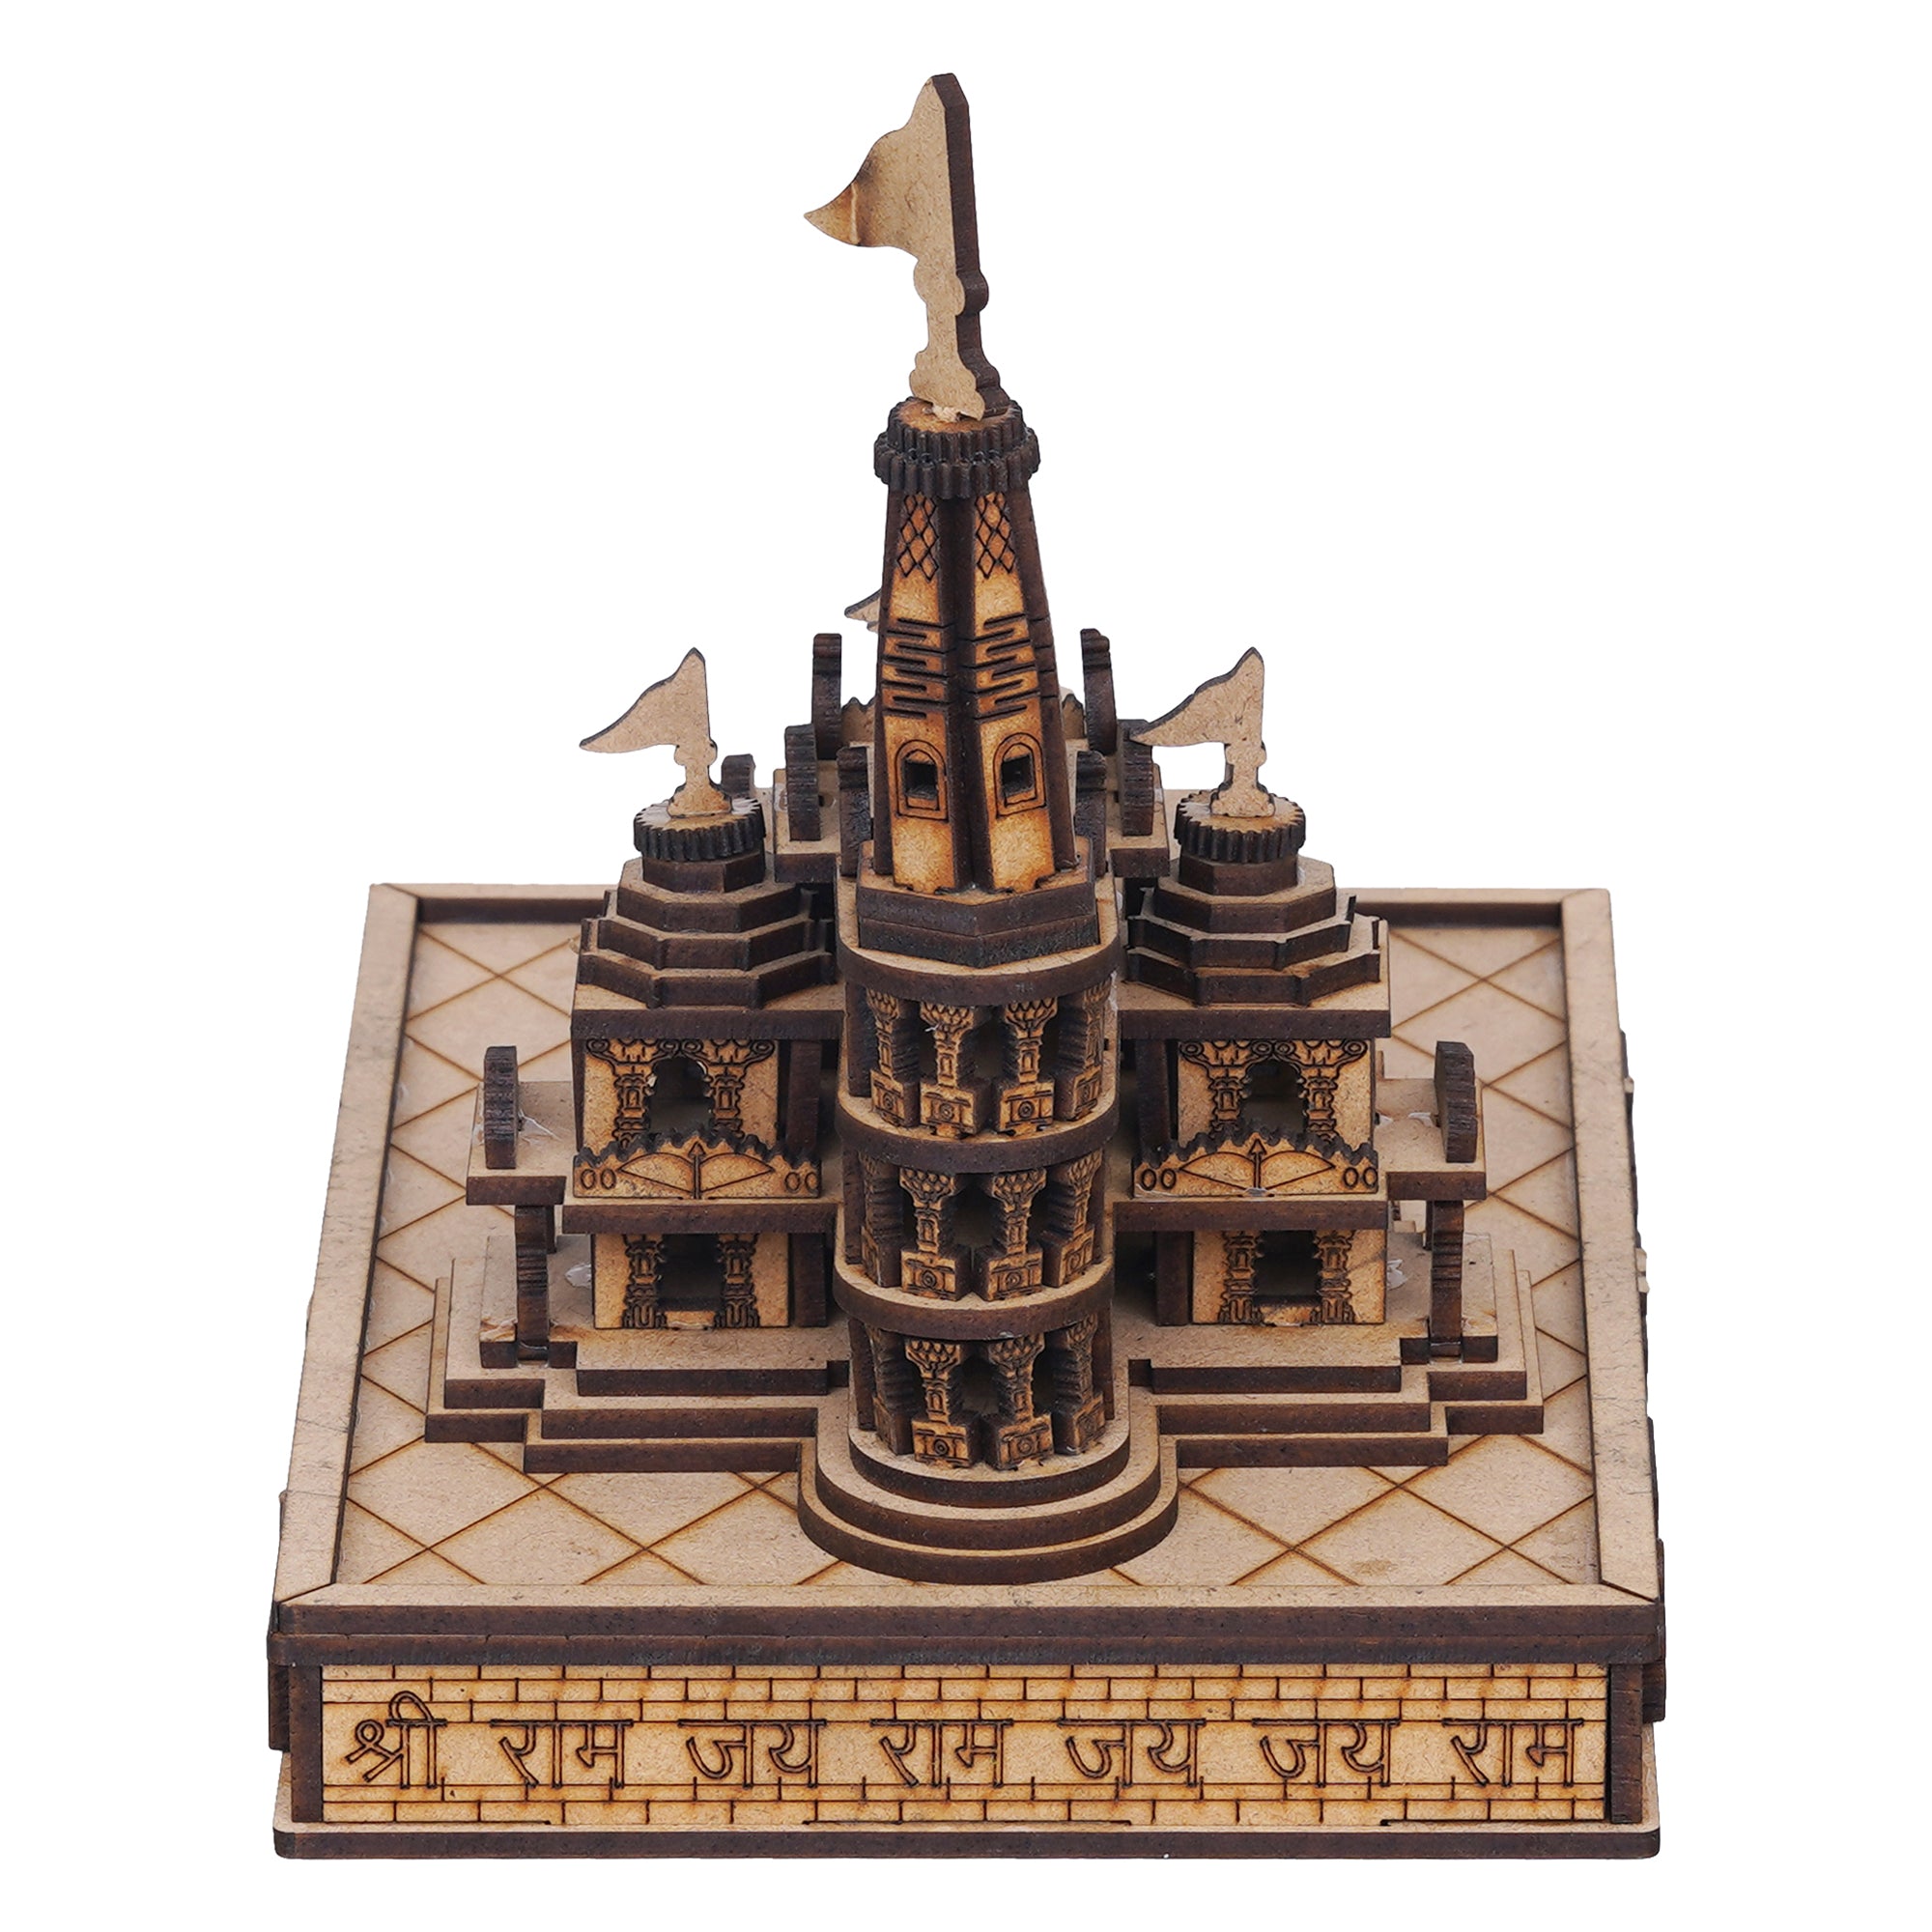 eCraftIndia Shri Ram Mandir Ayodhya Model - Wooden MDF Craftsmanship Authentic Designer Temple - Ideal for Home Temple, Decor, and Spiritual Gifting (Beige, Brown) 8